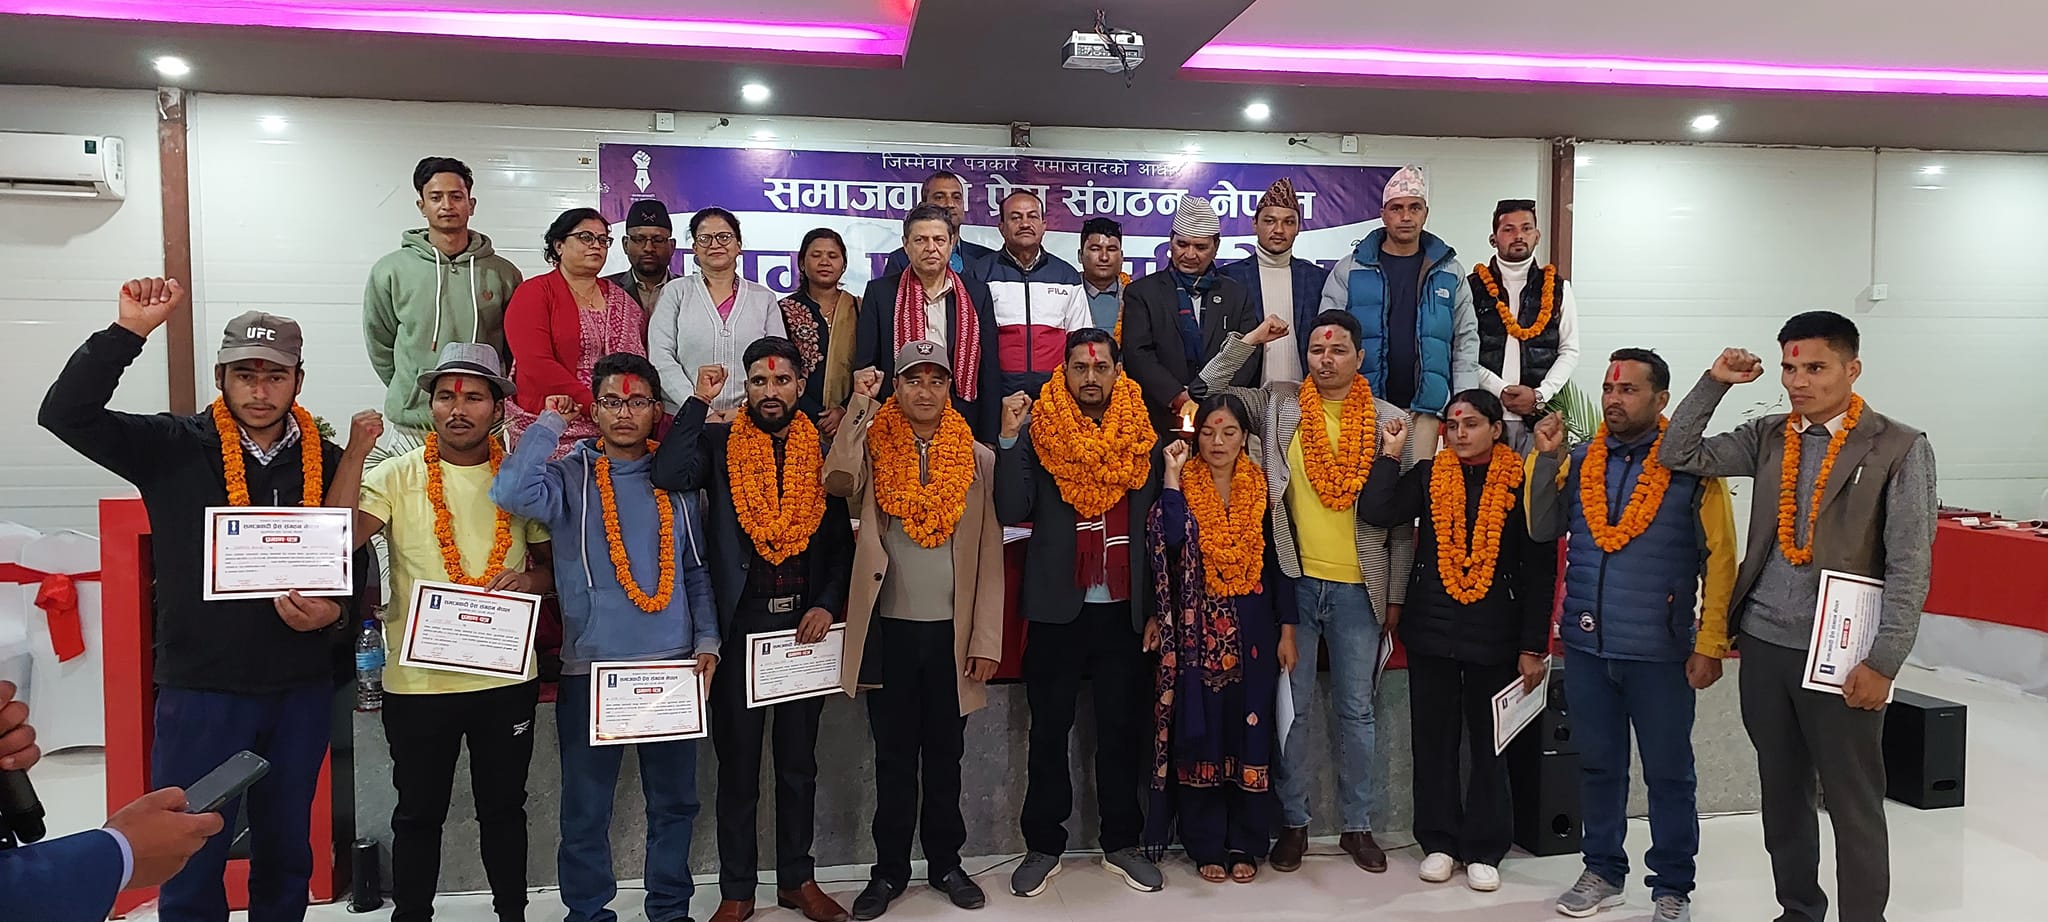 समाजवादी प्रेस संगठन नेपाल, सुदूरपश्चिम प्रदेशको अध्यक्षमा हिक्मतबहादुर सिंह चयन